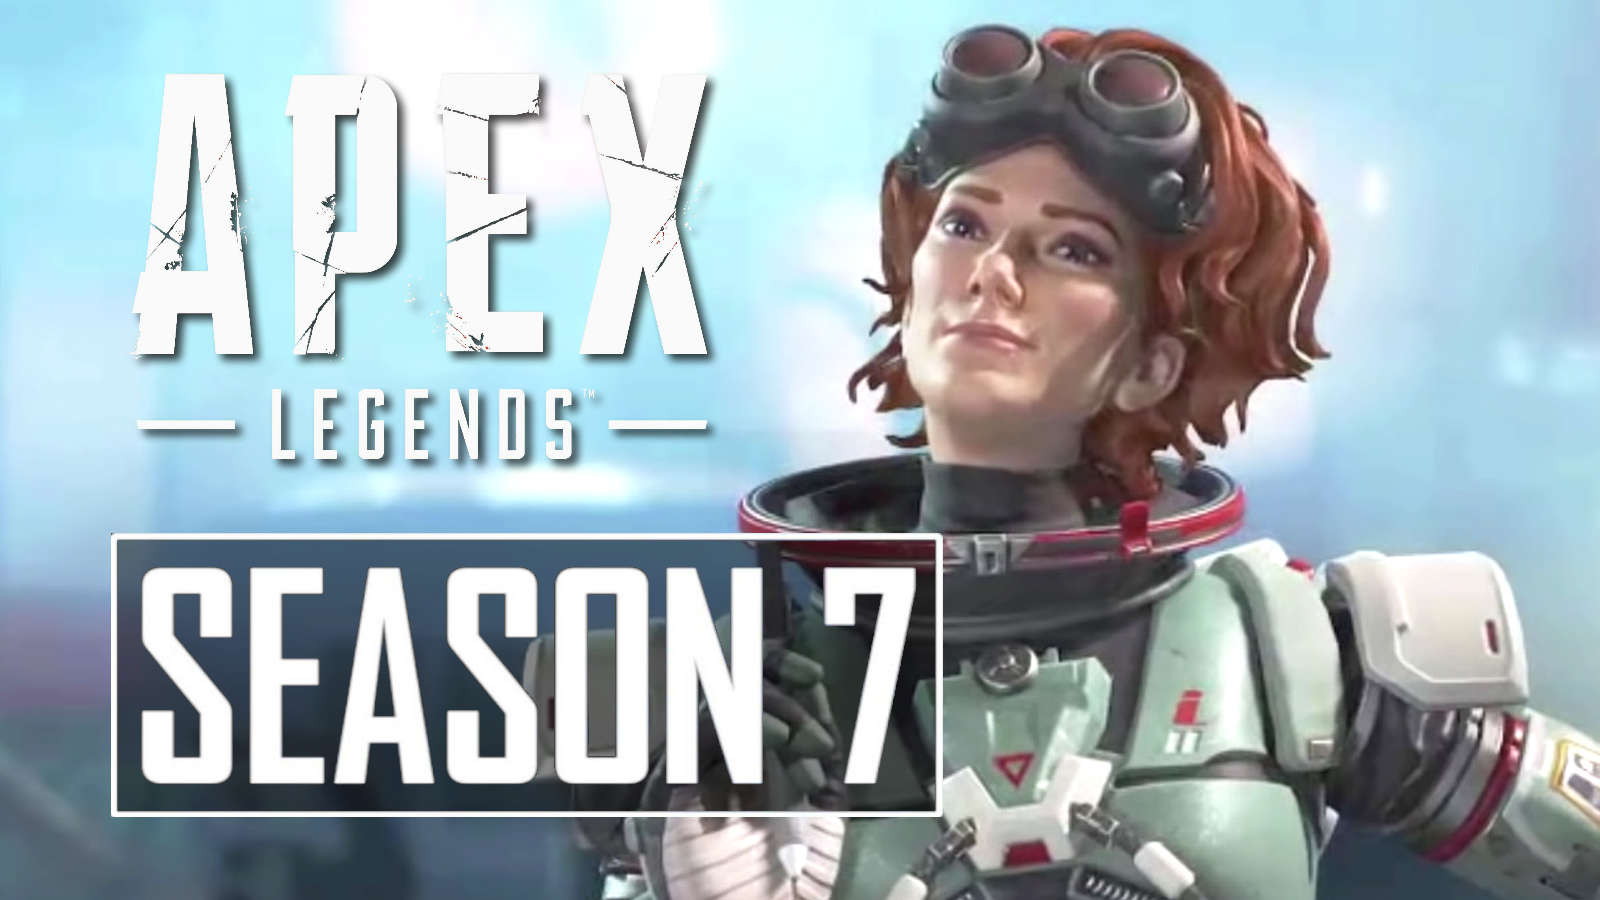 When does Apex Legends Season 7 start?